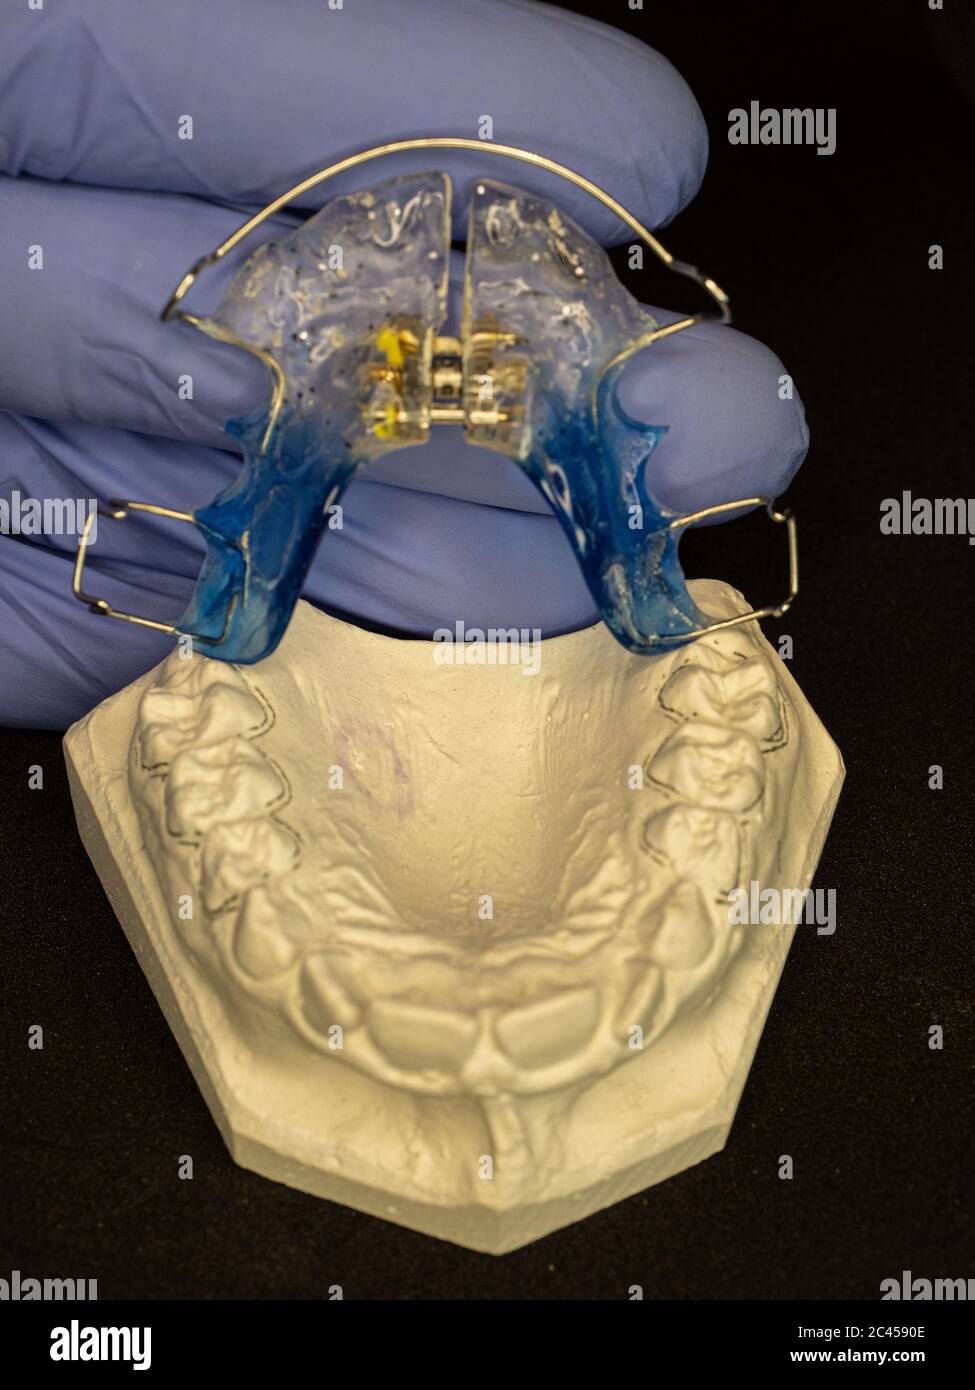 Dental gypsum models and dental brace. Dental Blue Removable Brace or Retainer for upper platal teeth Stock Photo